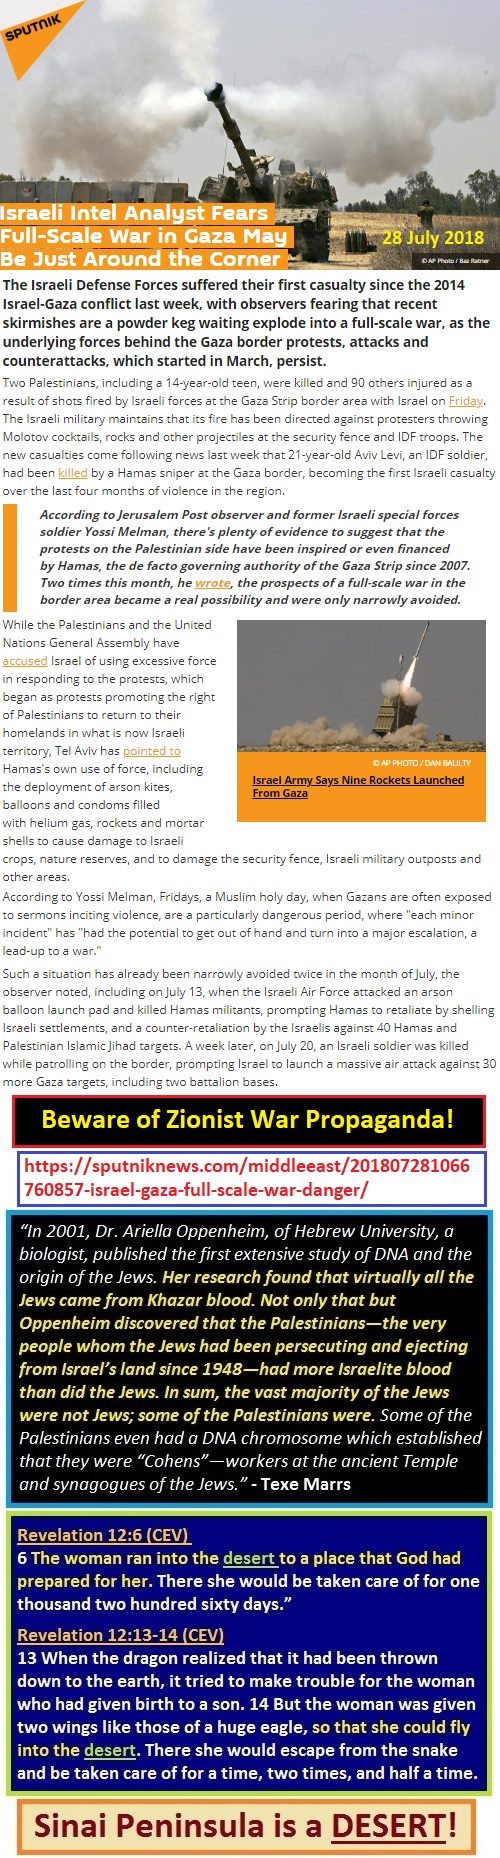 https://sputniknews.com/middleeast/201807281066760857-israel-gaza-full-scale-war-danger/